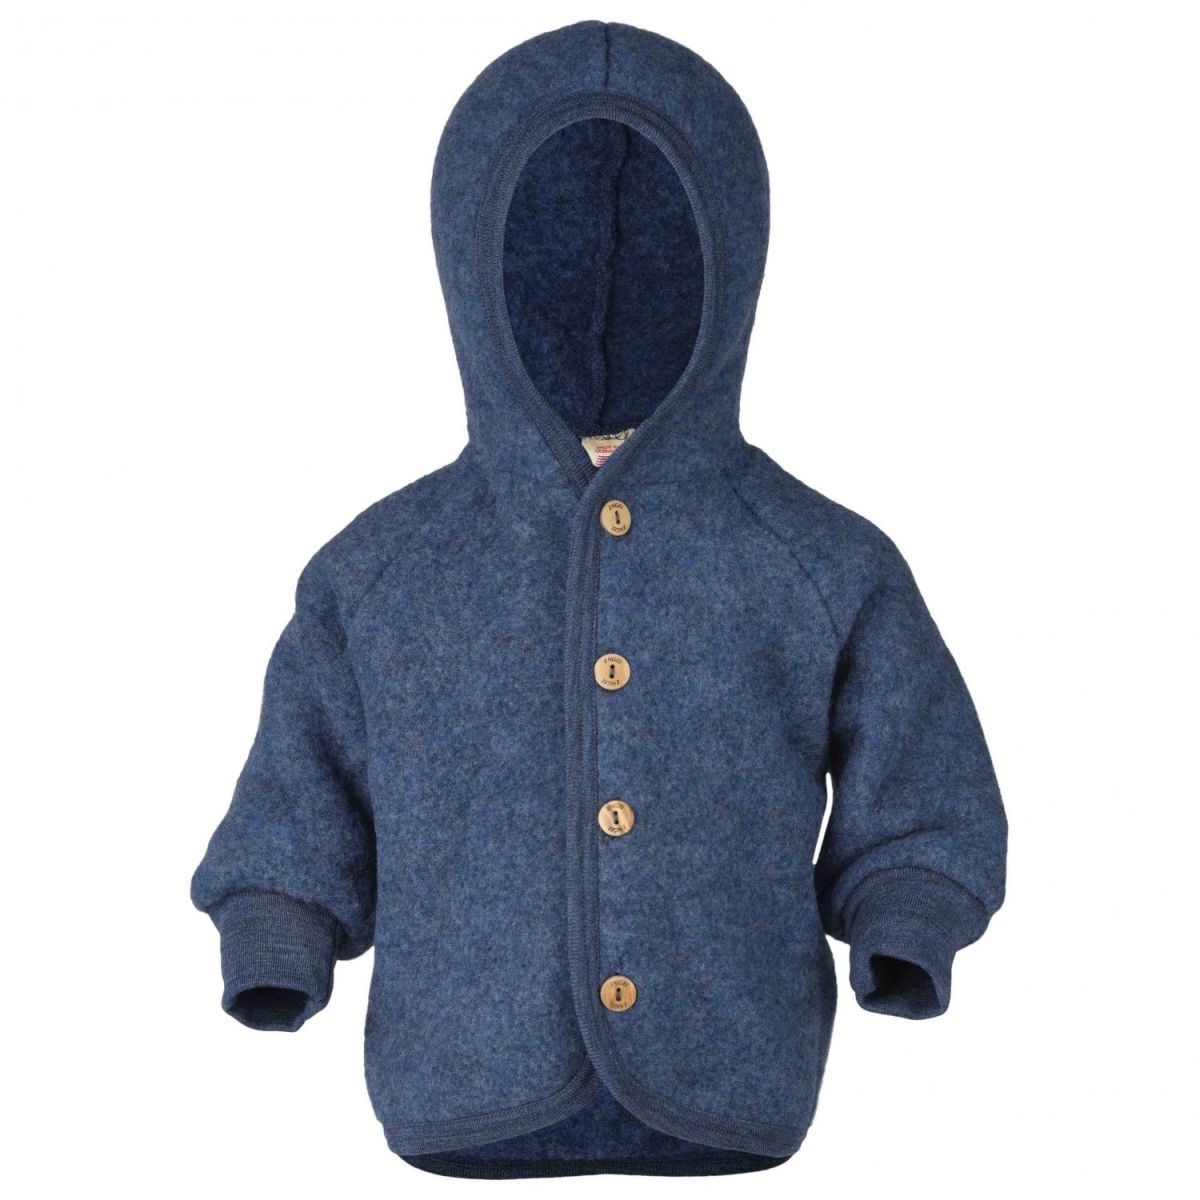 ENGEL Natur Hooded jacket with wooden buttons Blue melange 575520-080 